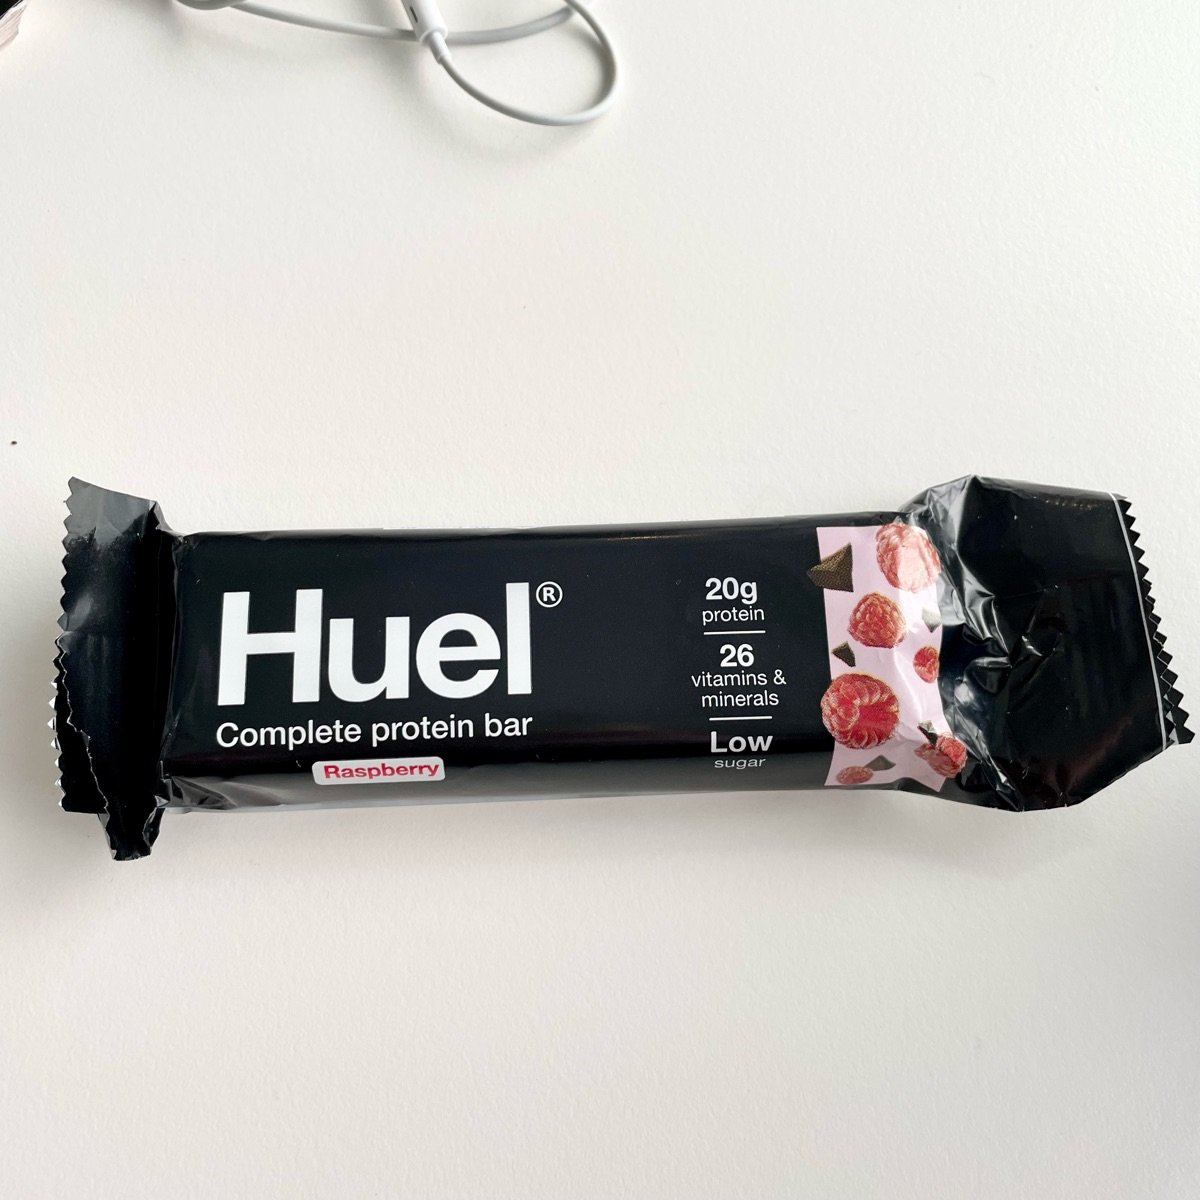 Huel Complete Protein Bar Raspberry Reviews | abillion